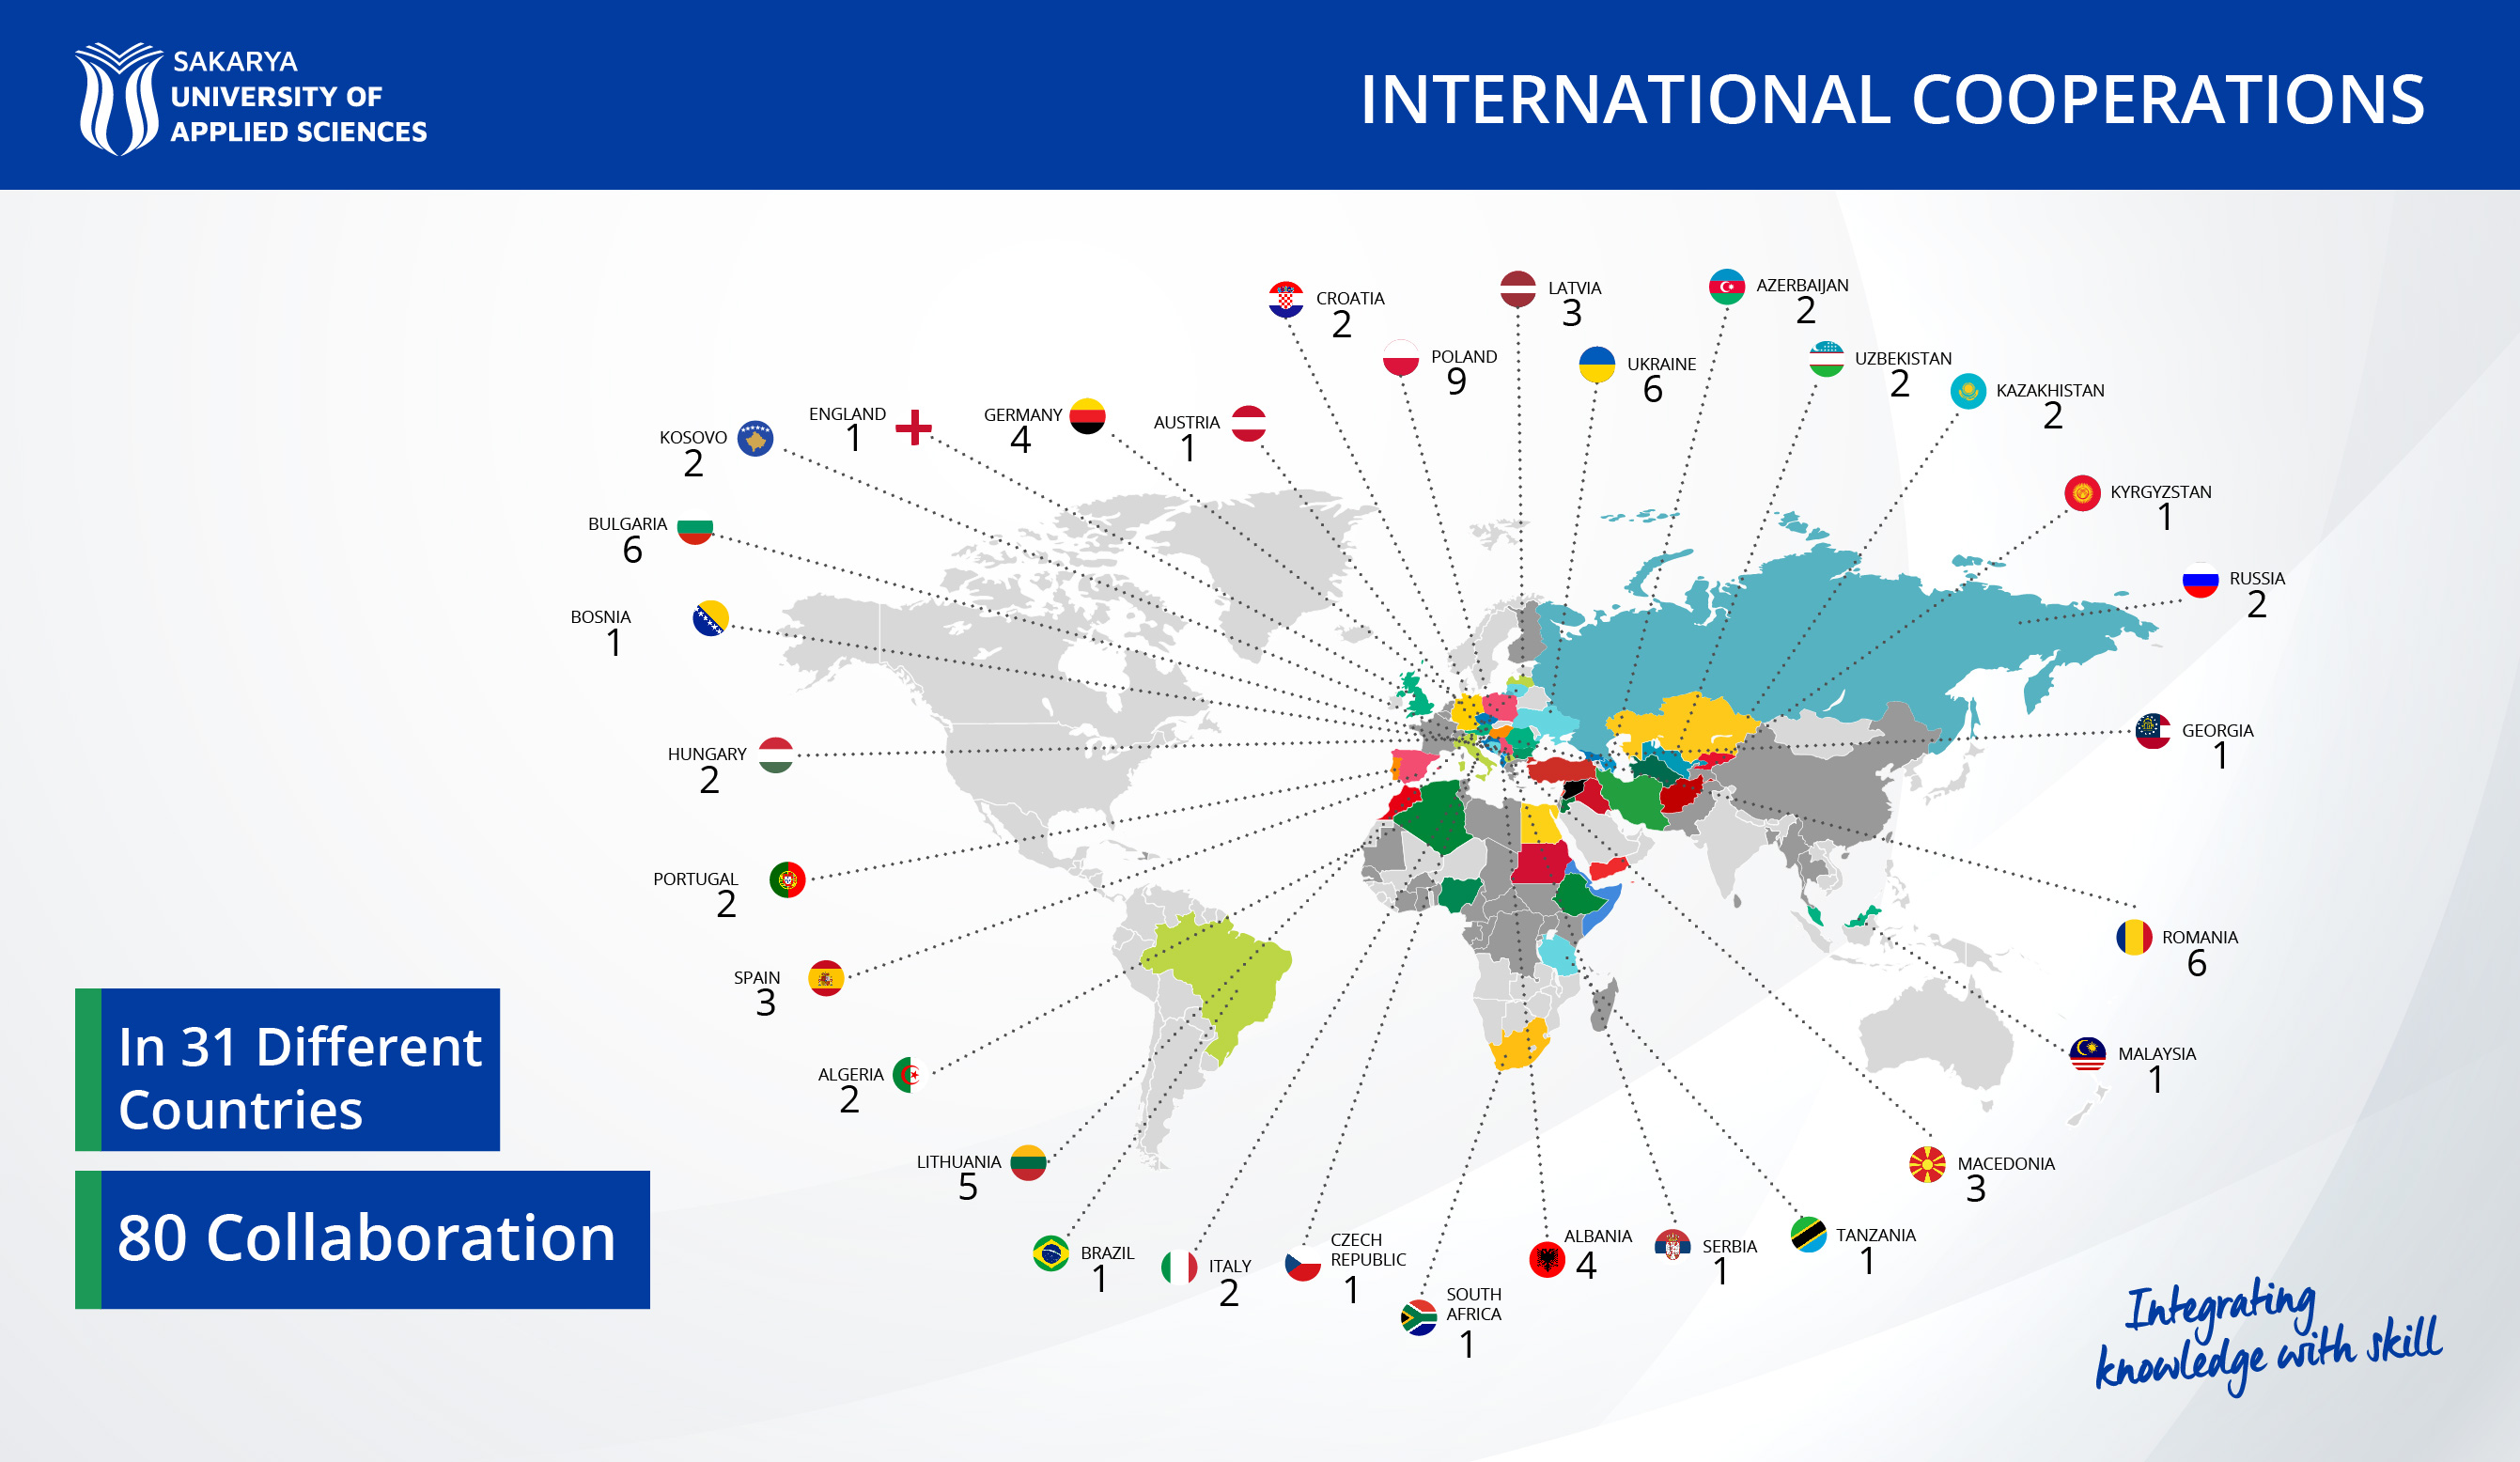 INTERNATIONAL COOPERATIONS